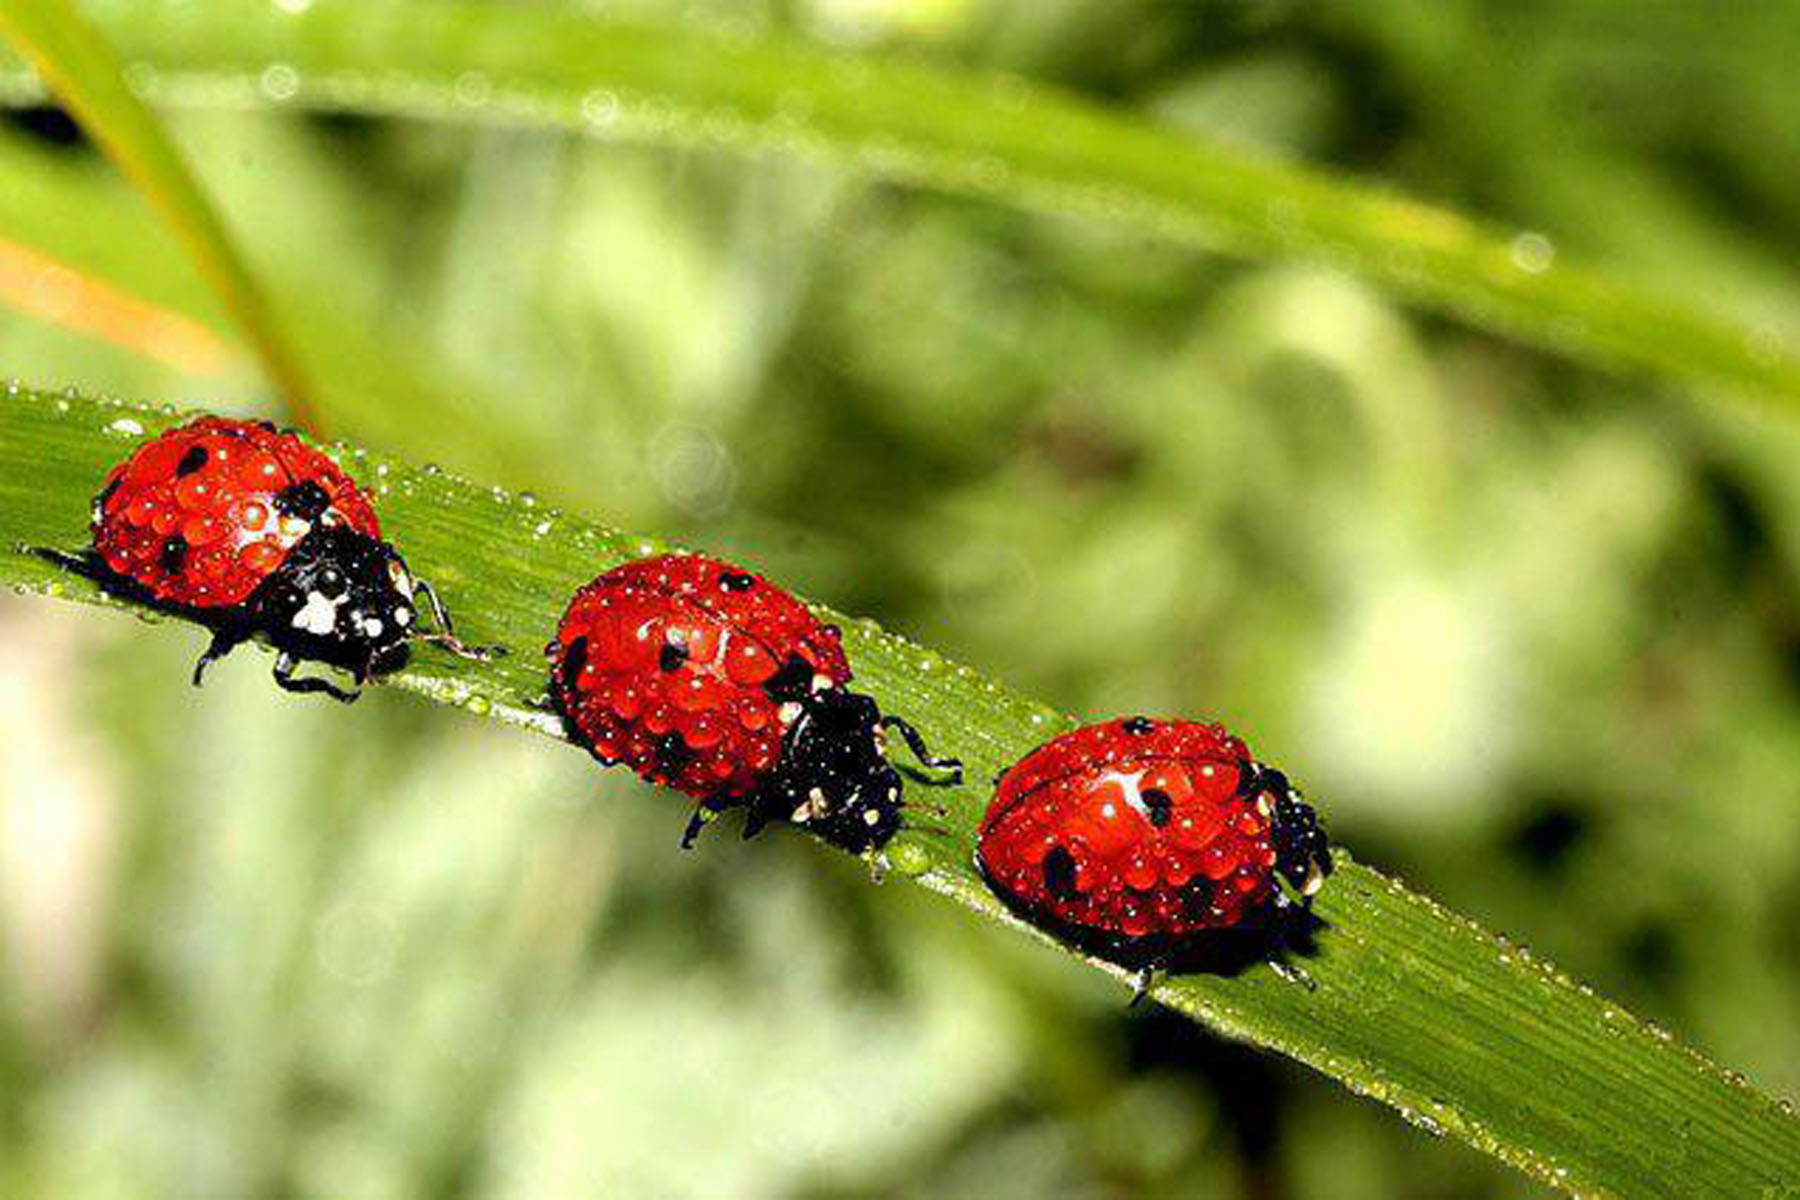 lady-bugs-ladybugs-32773963-1800-1200.jpg